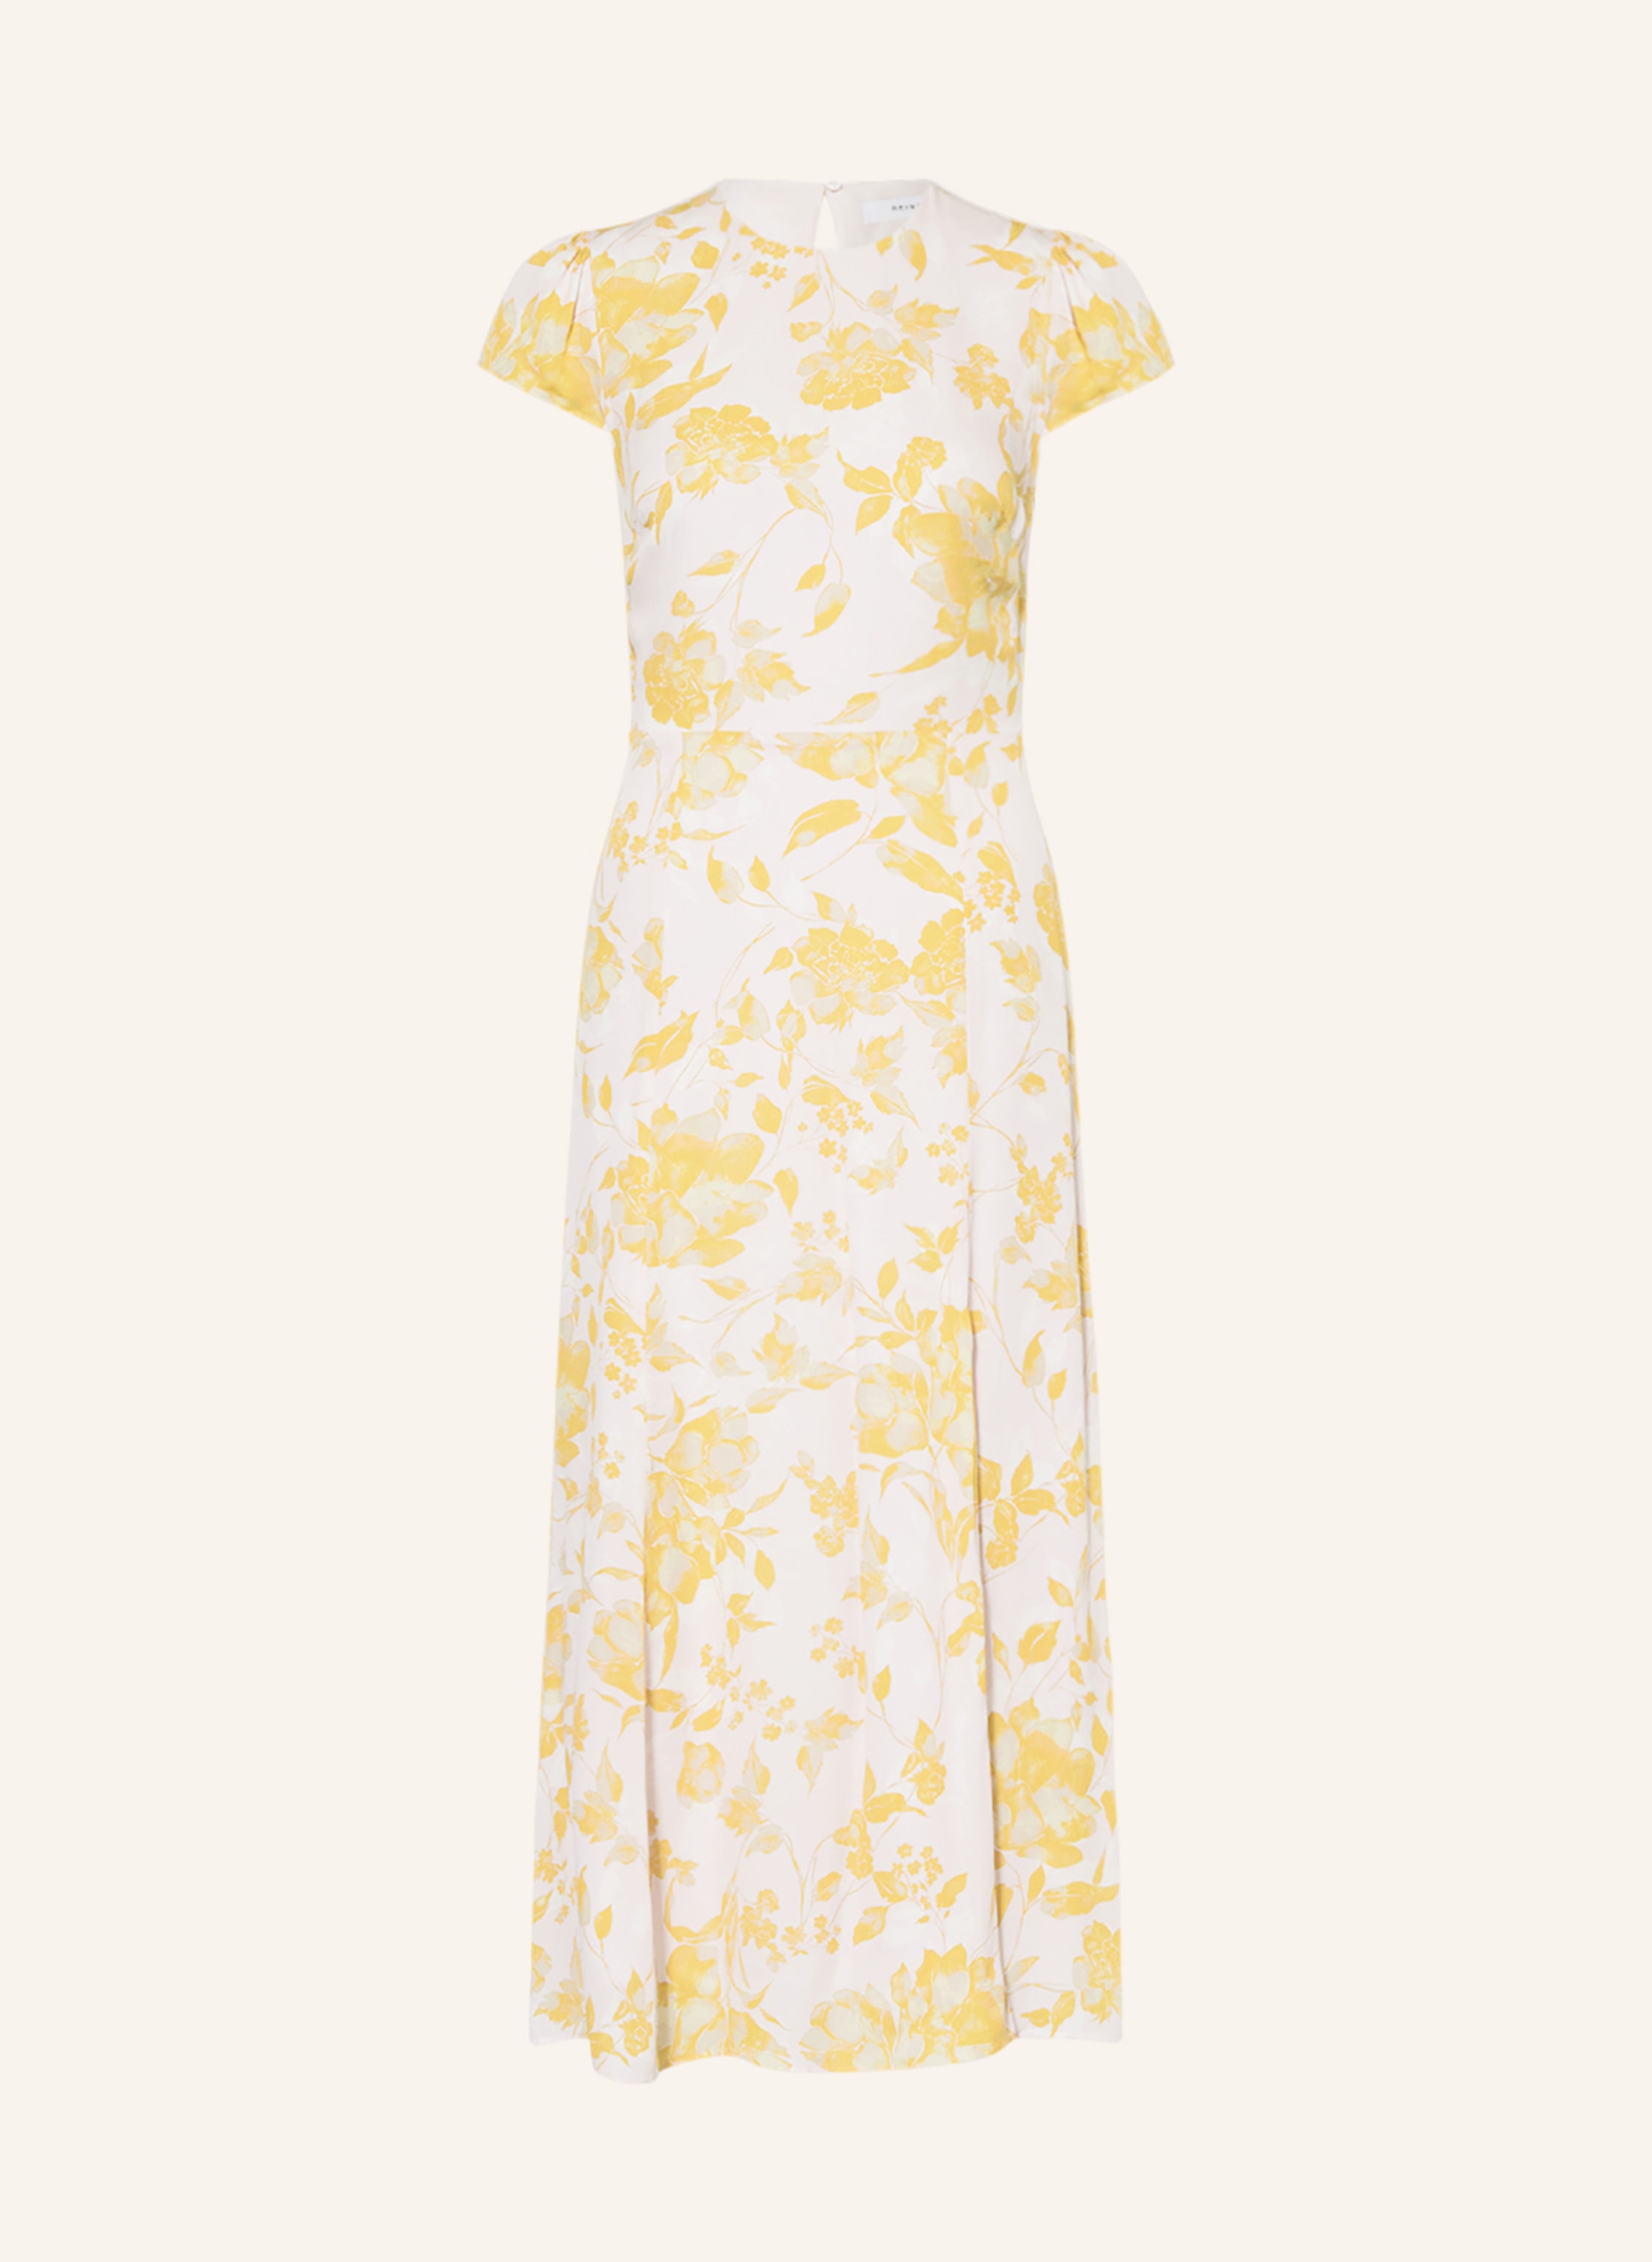 Cut-out Kleid weiss in gelb/ mit REISS hellrosa/ LIVIA